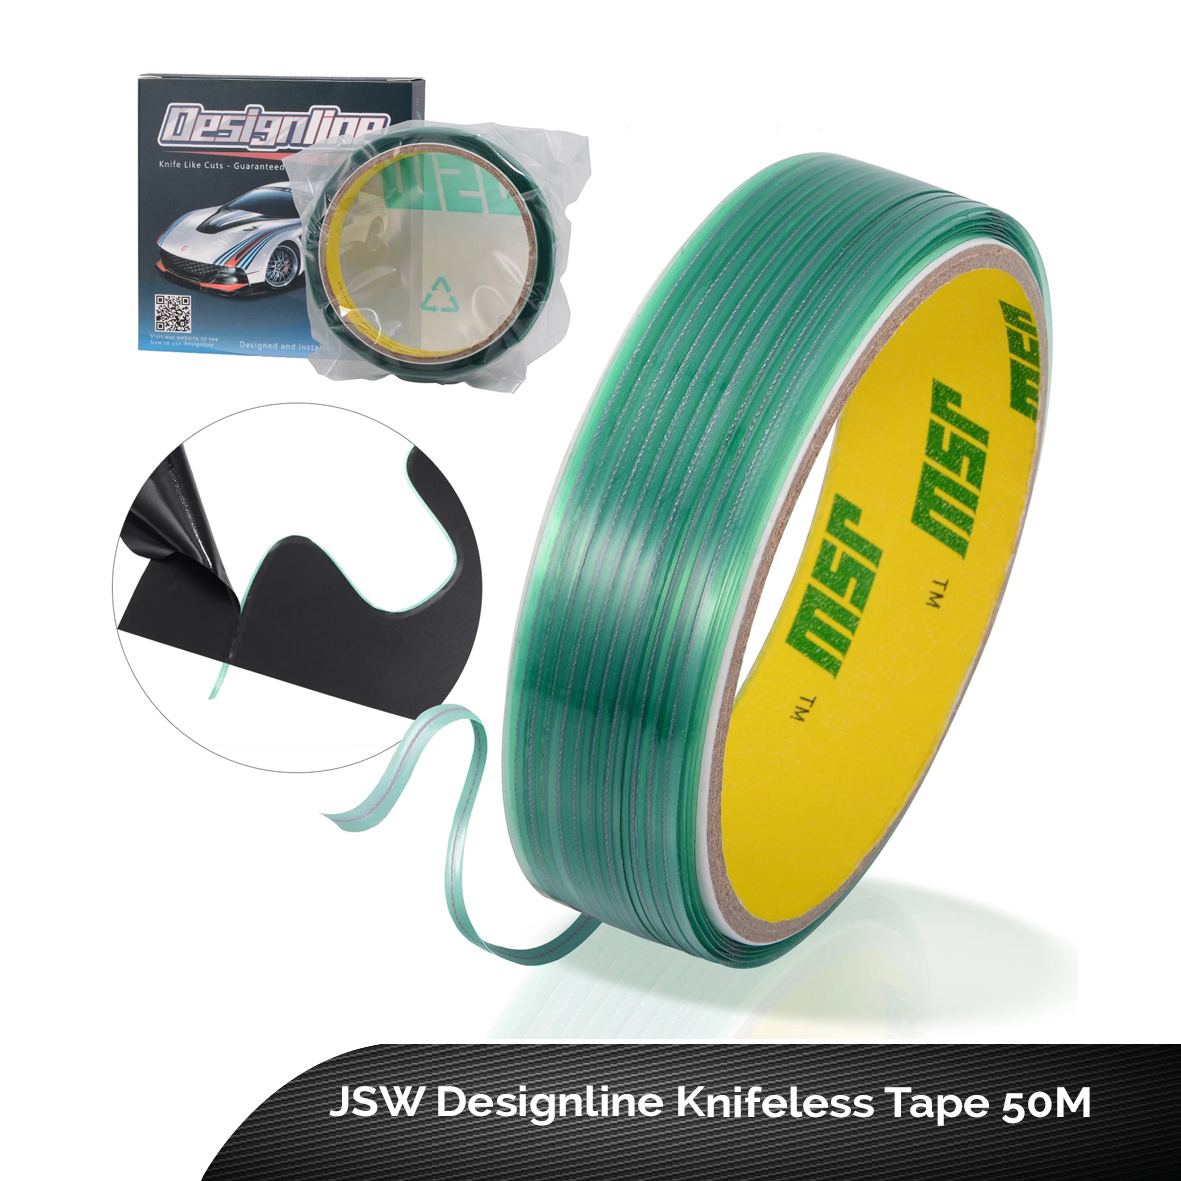 JSW Designline Knifeless Tape 50M